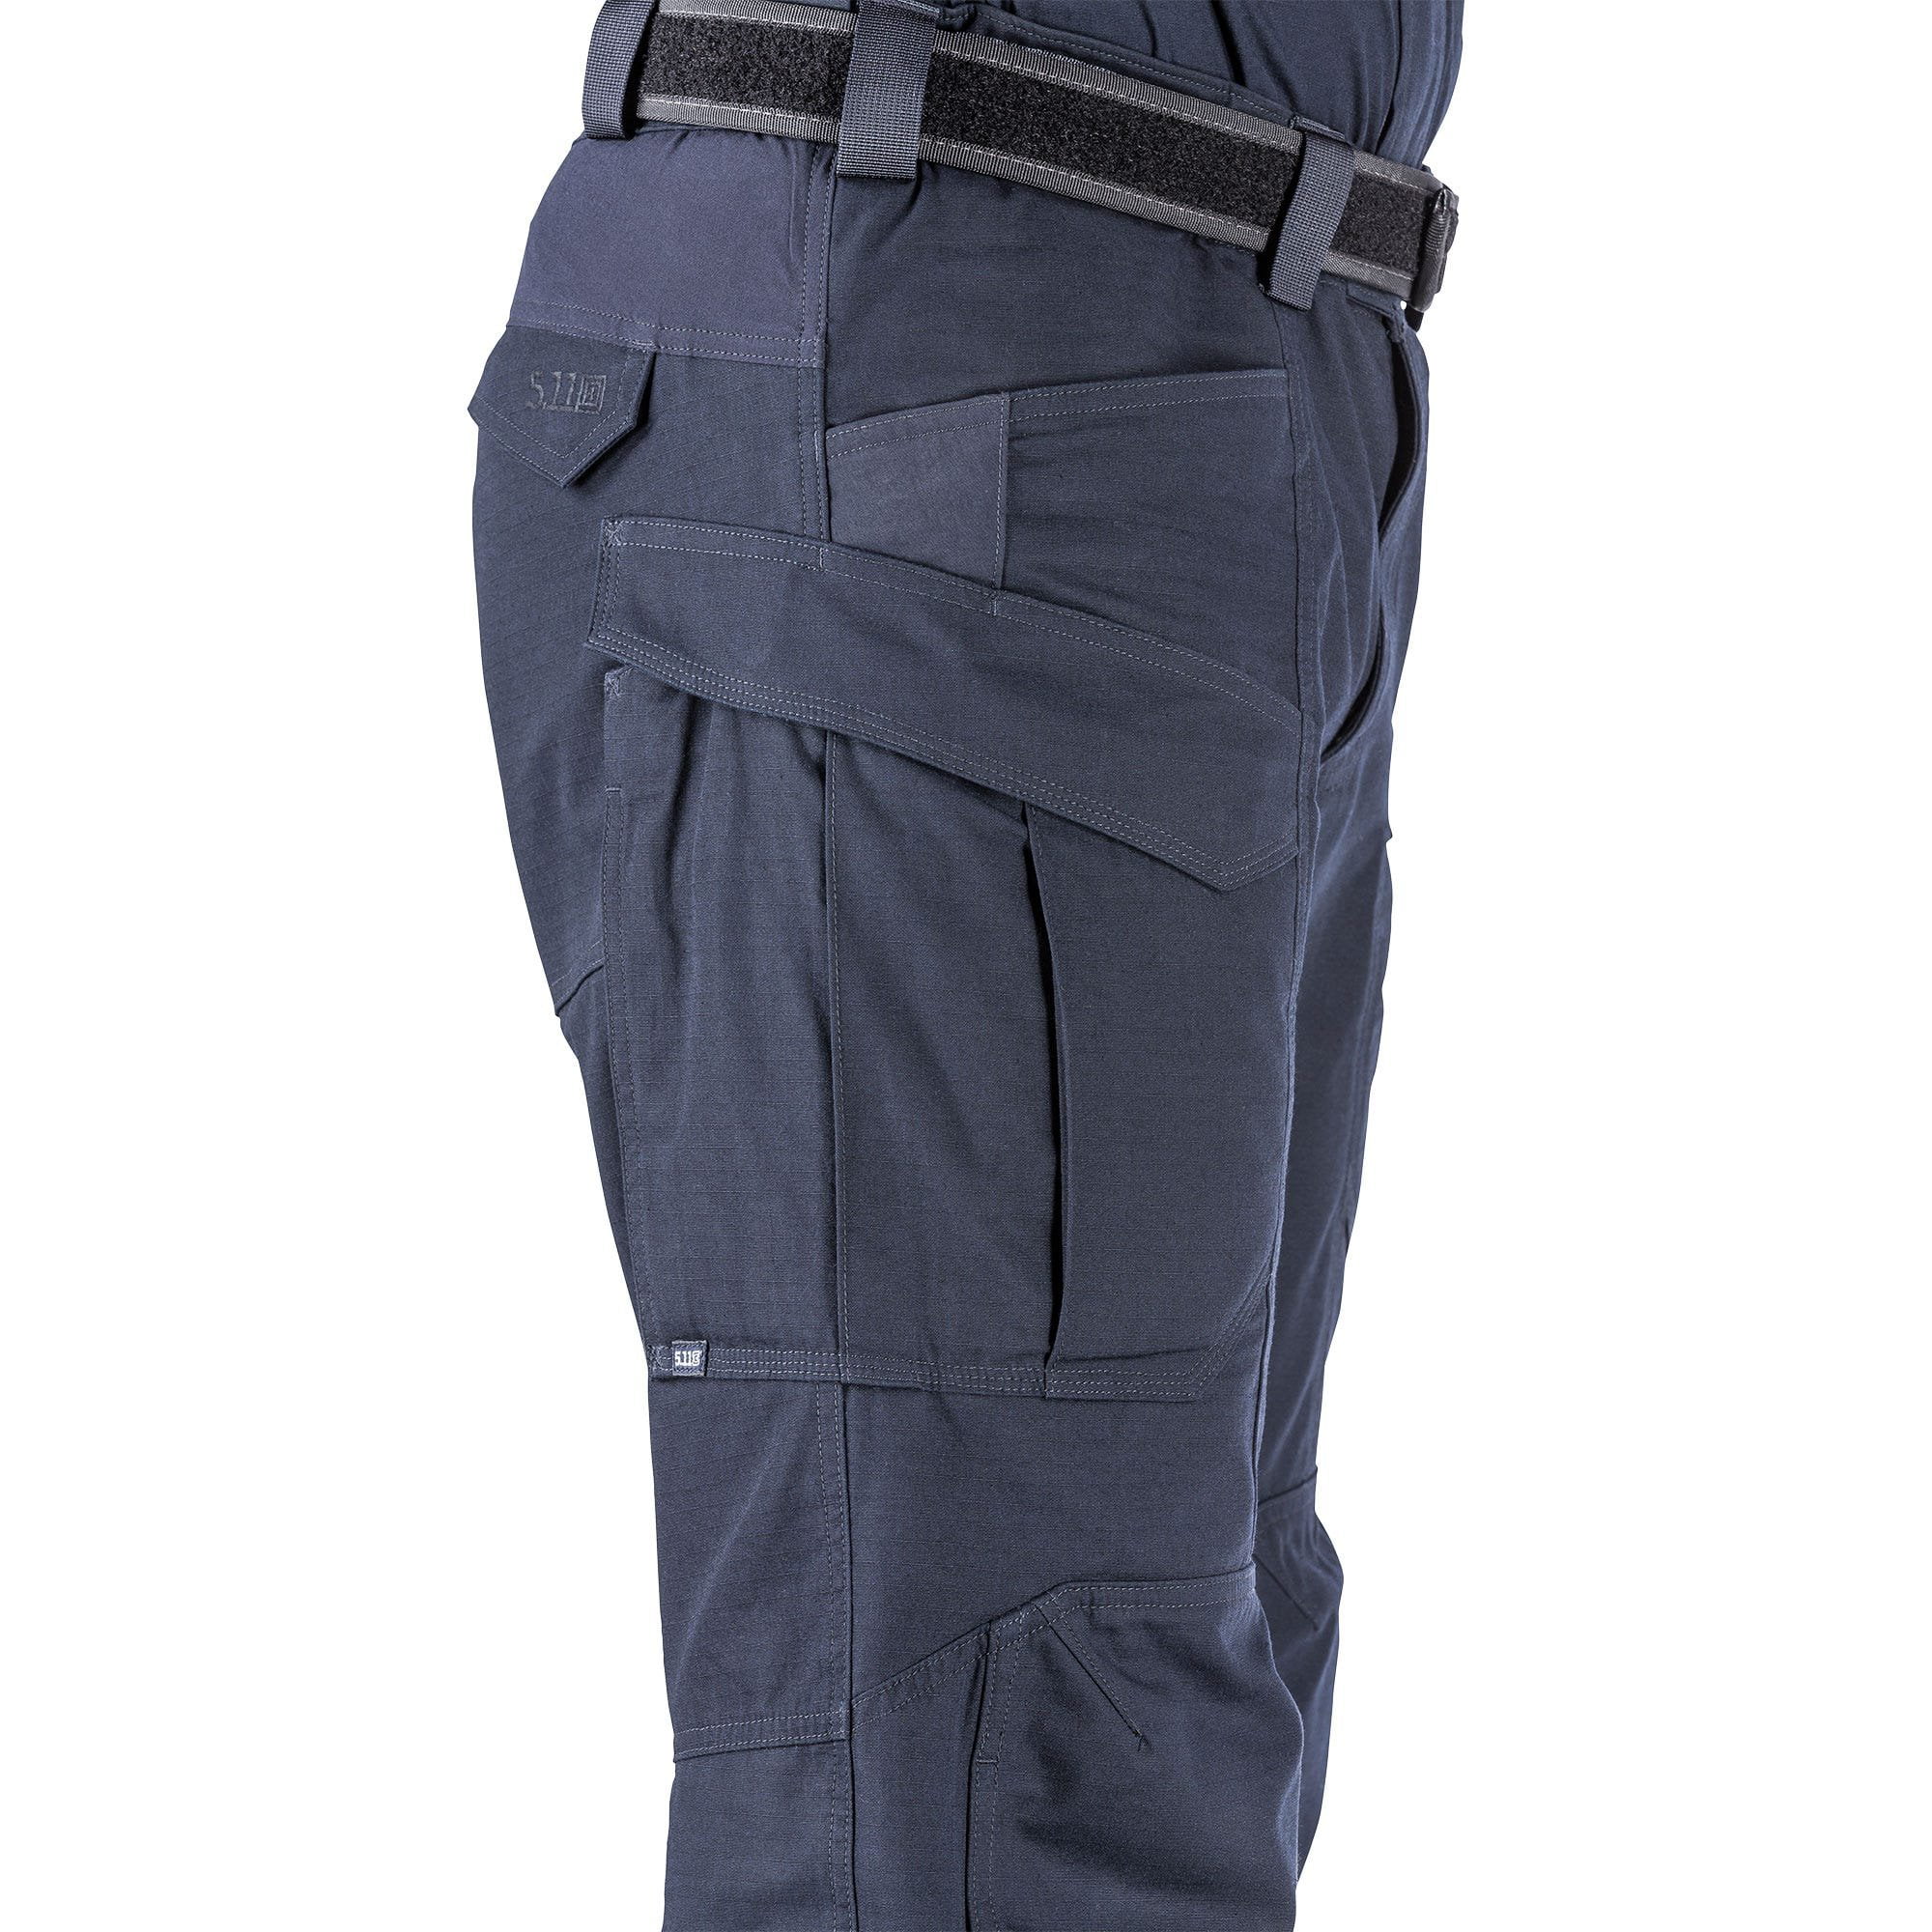 5.11 Work Gear XPRT Pants, Teflon Treated, Nylon Ripstop Fabric, Dark Navy,  42W x 30L, Style 74068